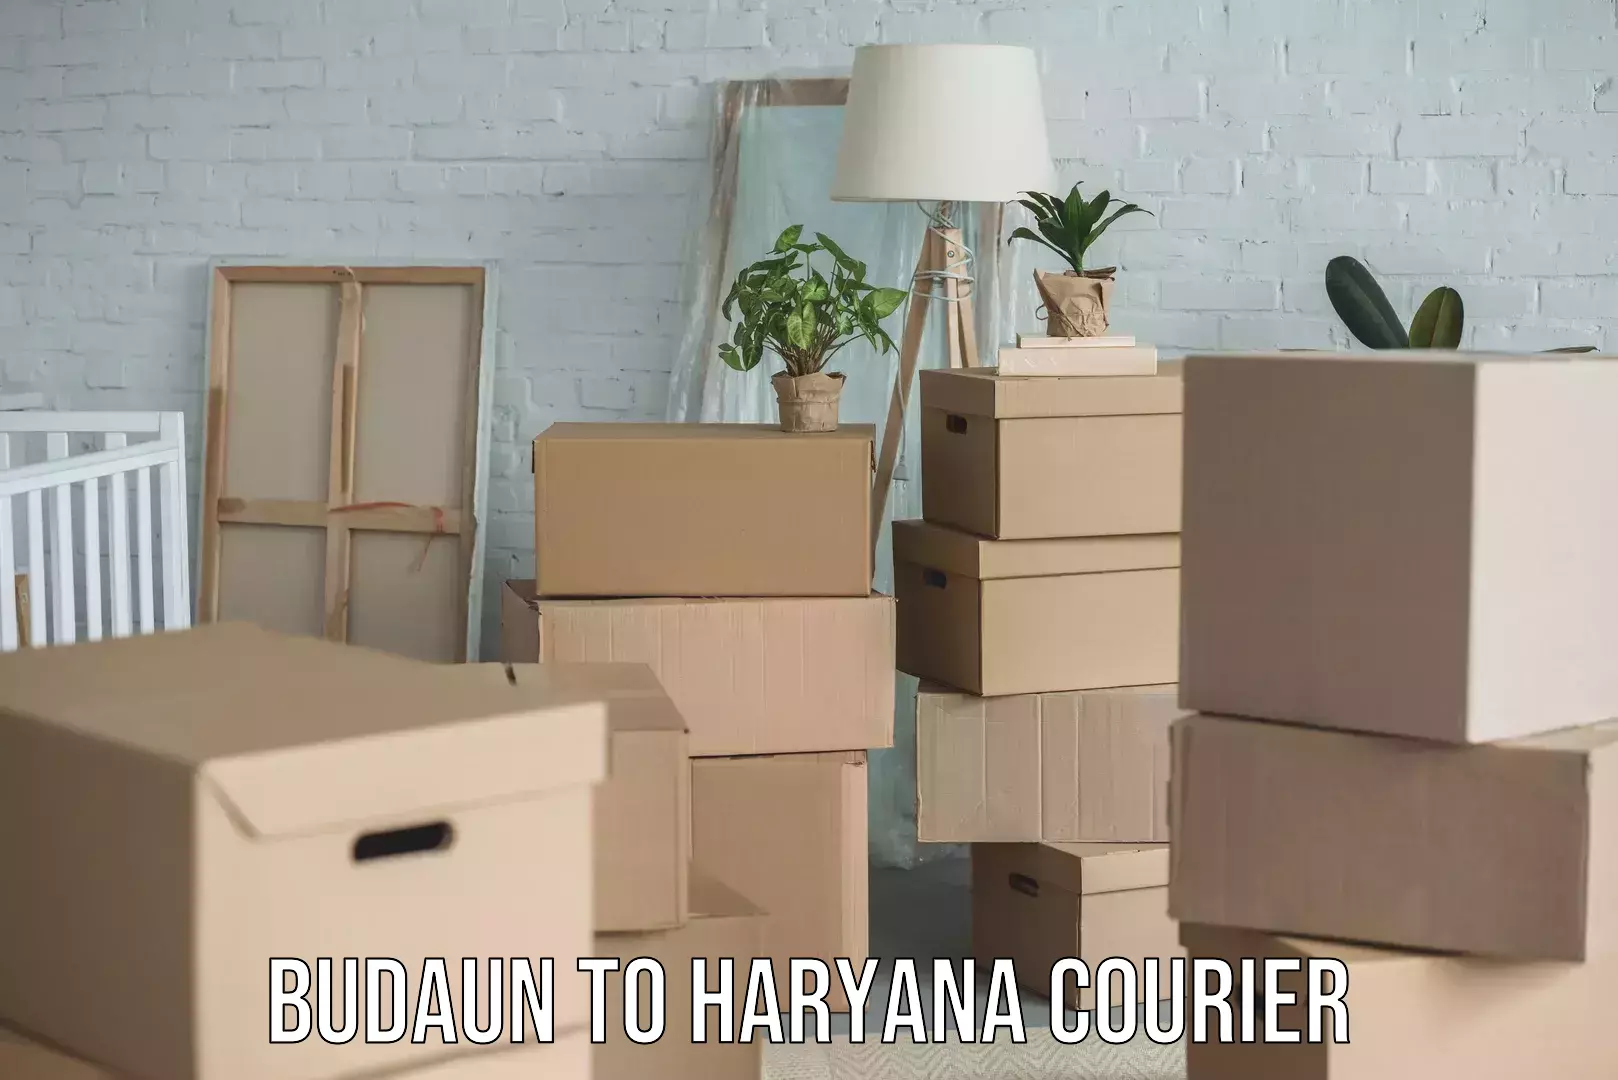 Courier service comparison Budaun to Haryana